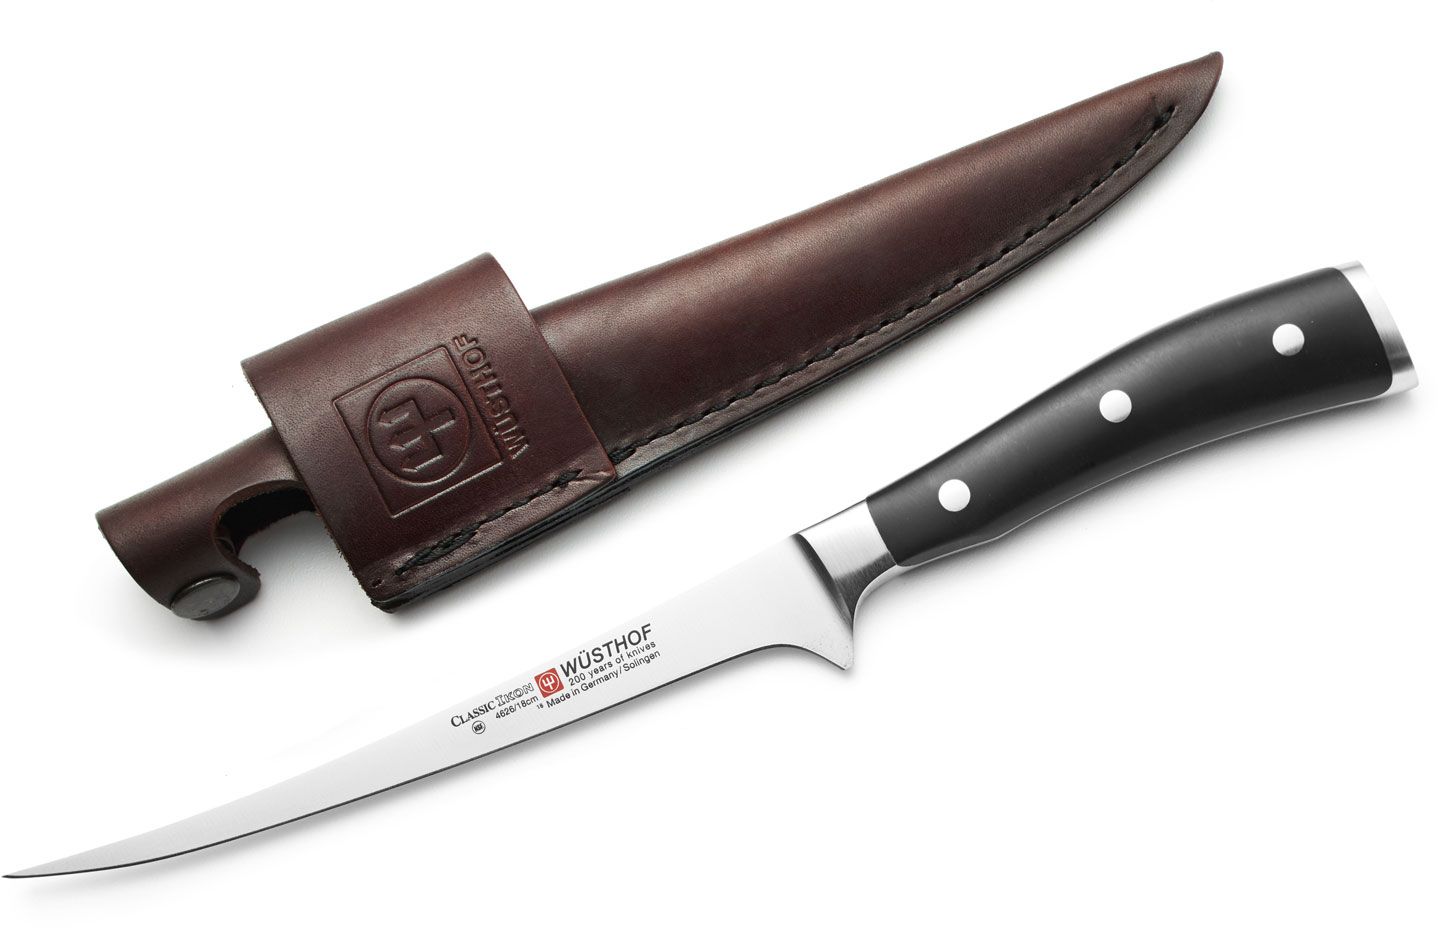 Wusthof Classic Ikon 7" Fillet Knife, Brown Leather Sheath